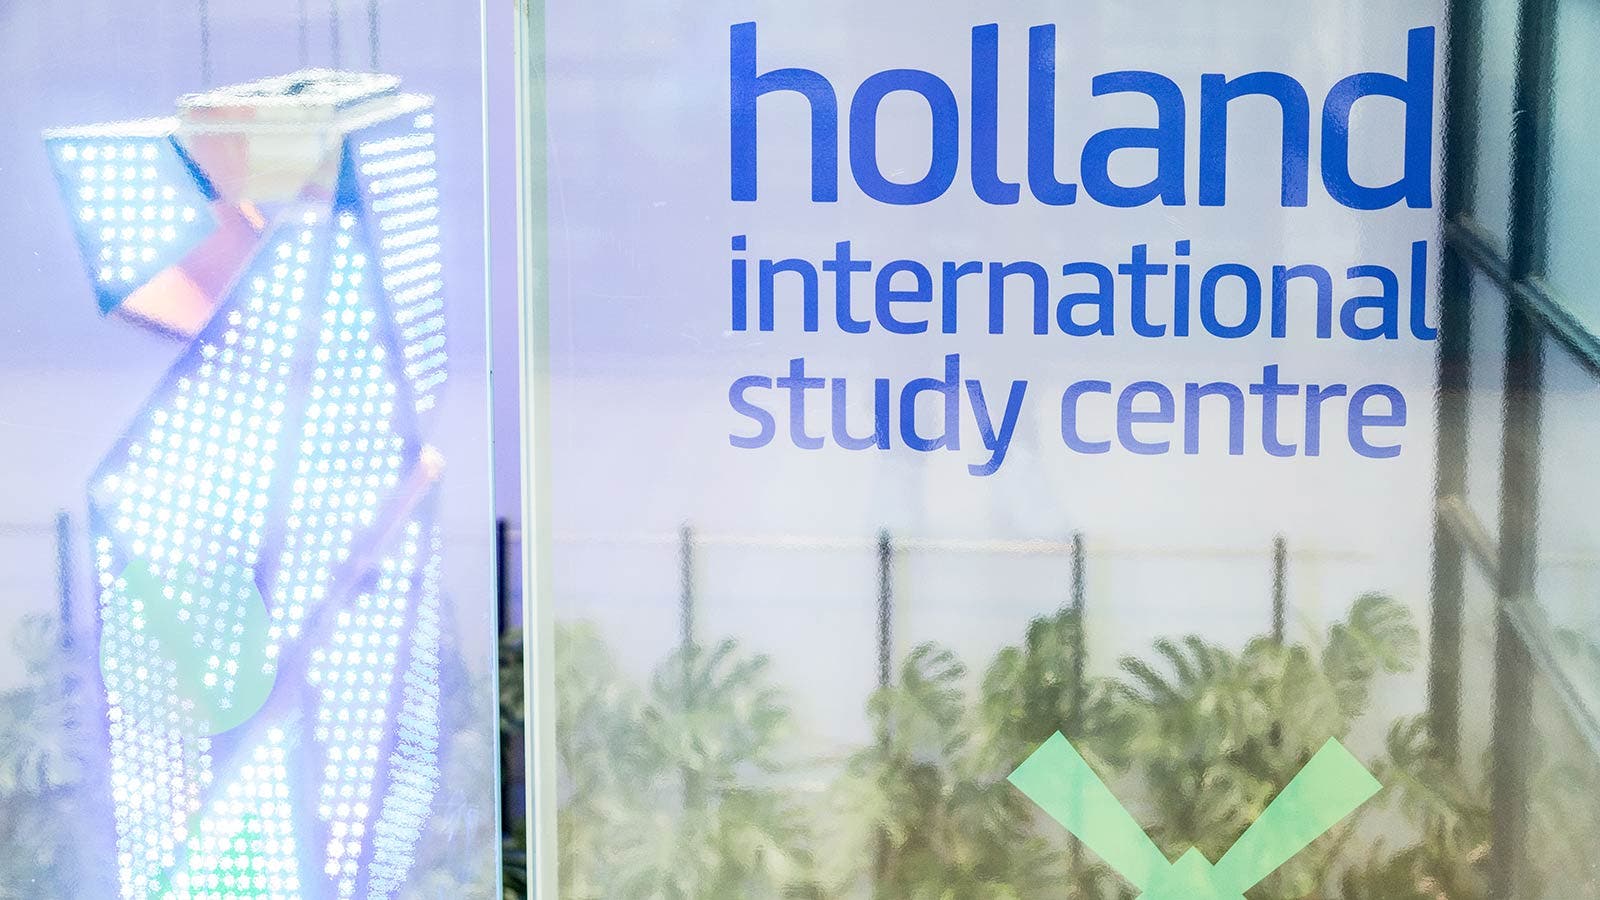 The Holland International Study Centre logo on a door.